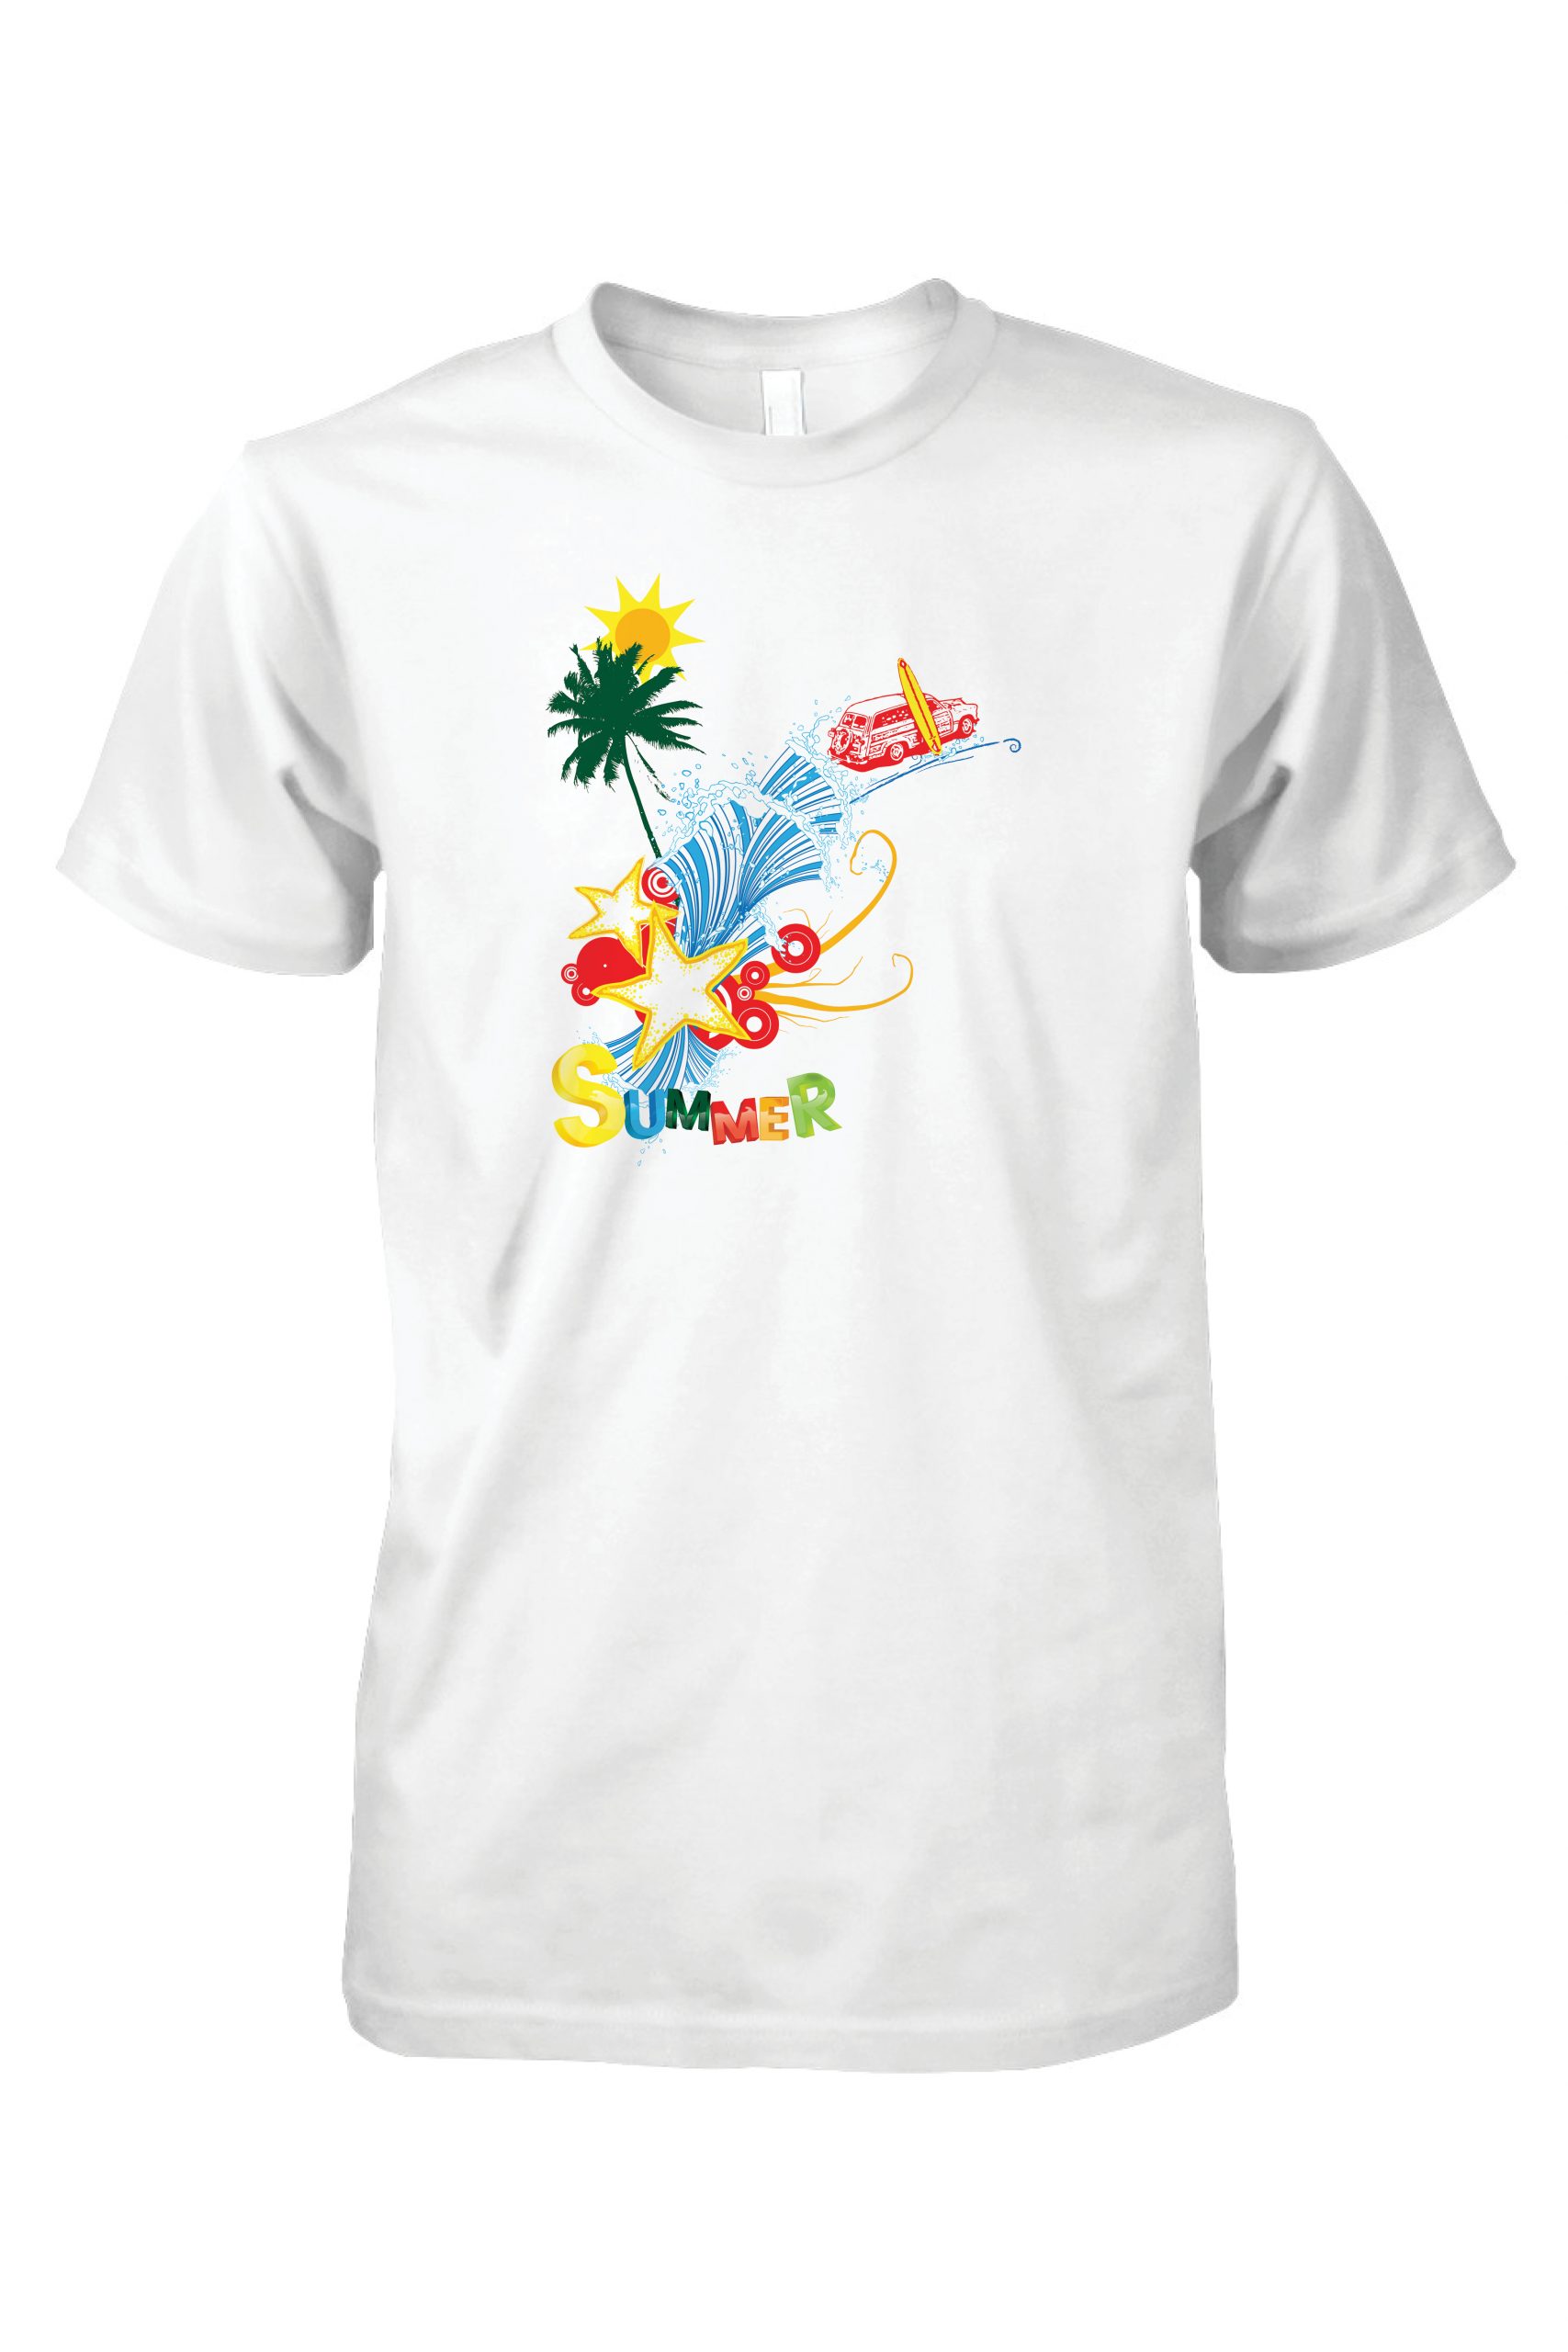 Affordable quality summer t-shirt print.